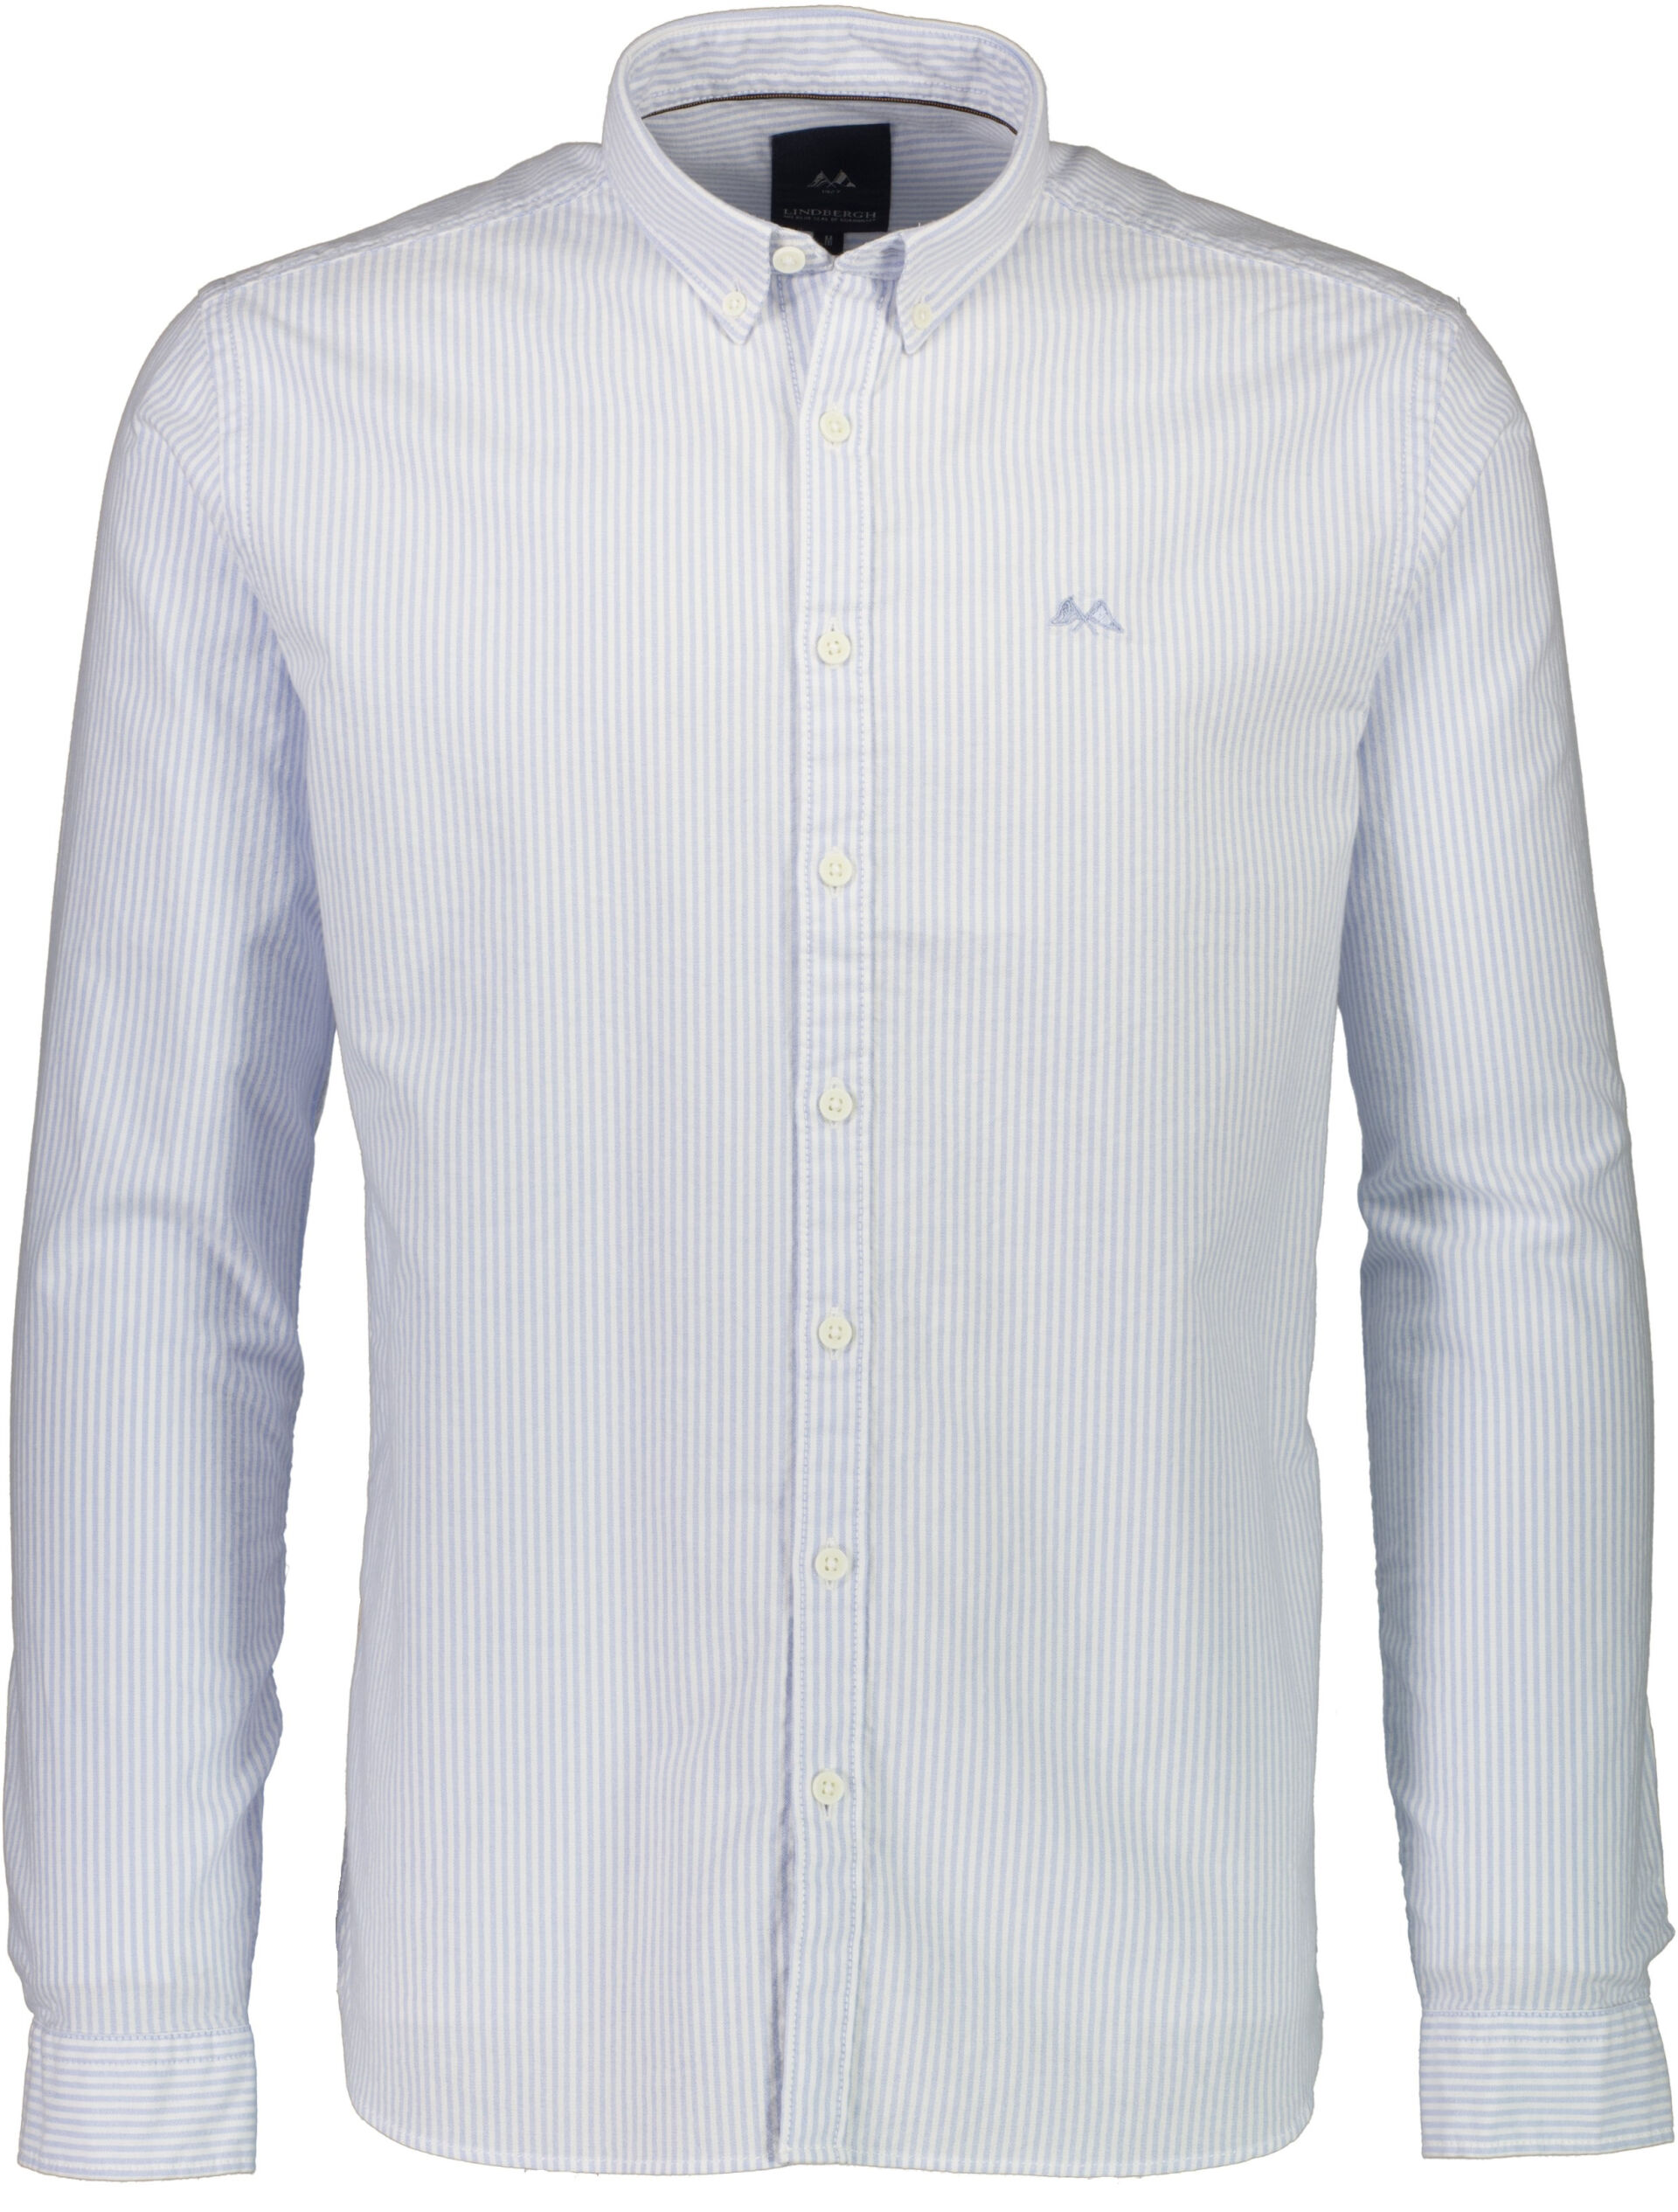 Oxford shirt 30-220084